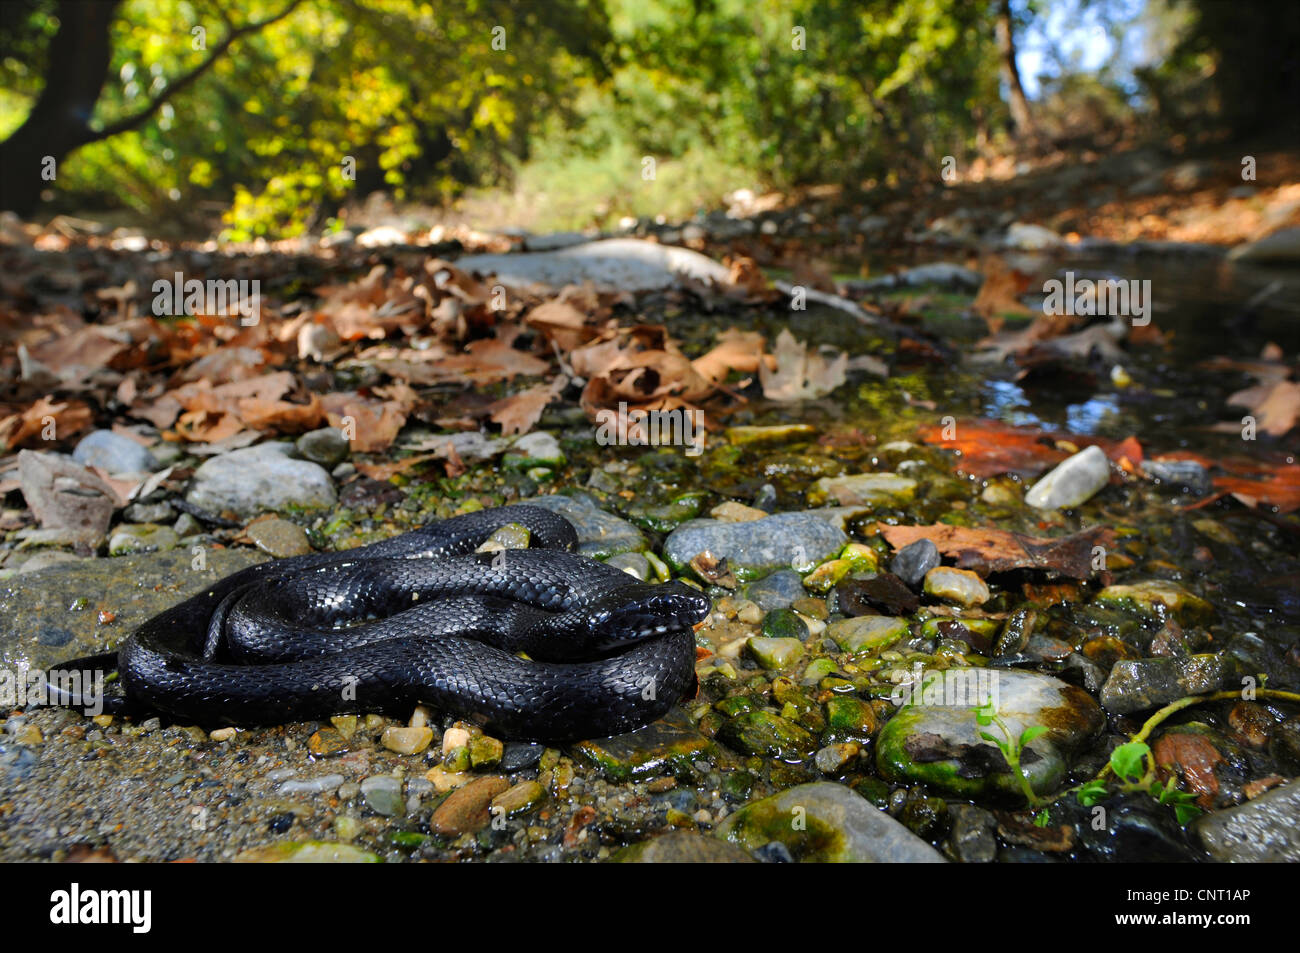 dice snake (Natrix tessellata), black morph, Greece, Creta Stock Photo